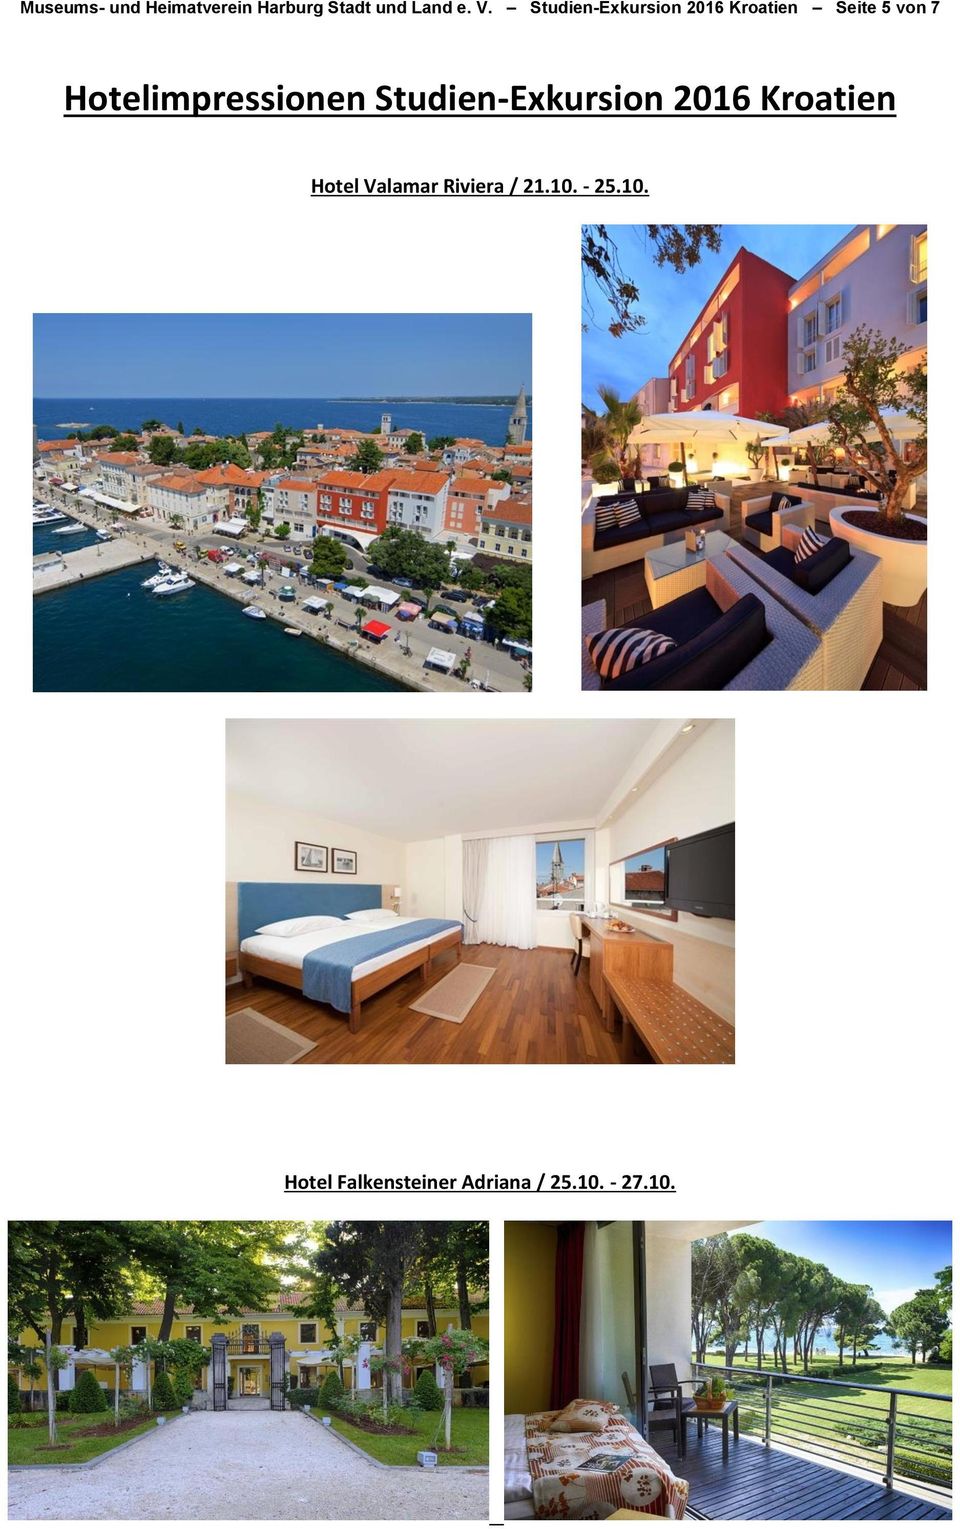 Hotelimpressionen Studien-Exkursion 2016 Kroatien Hotel